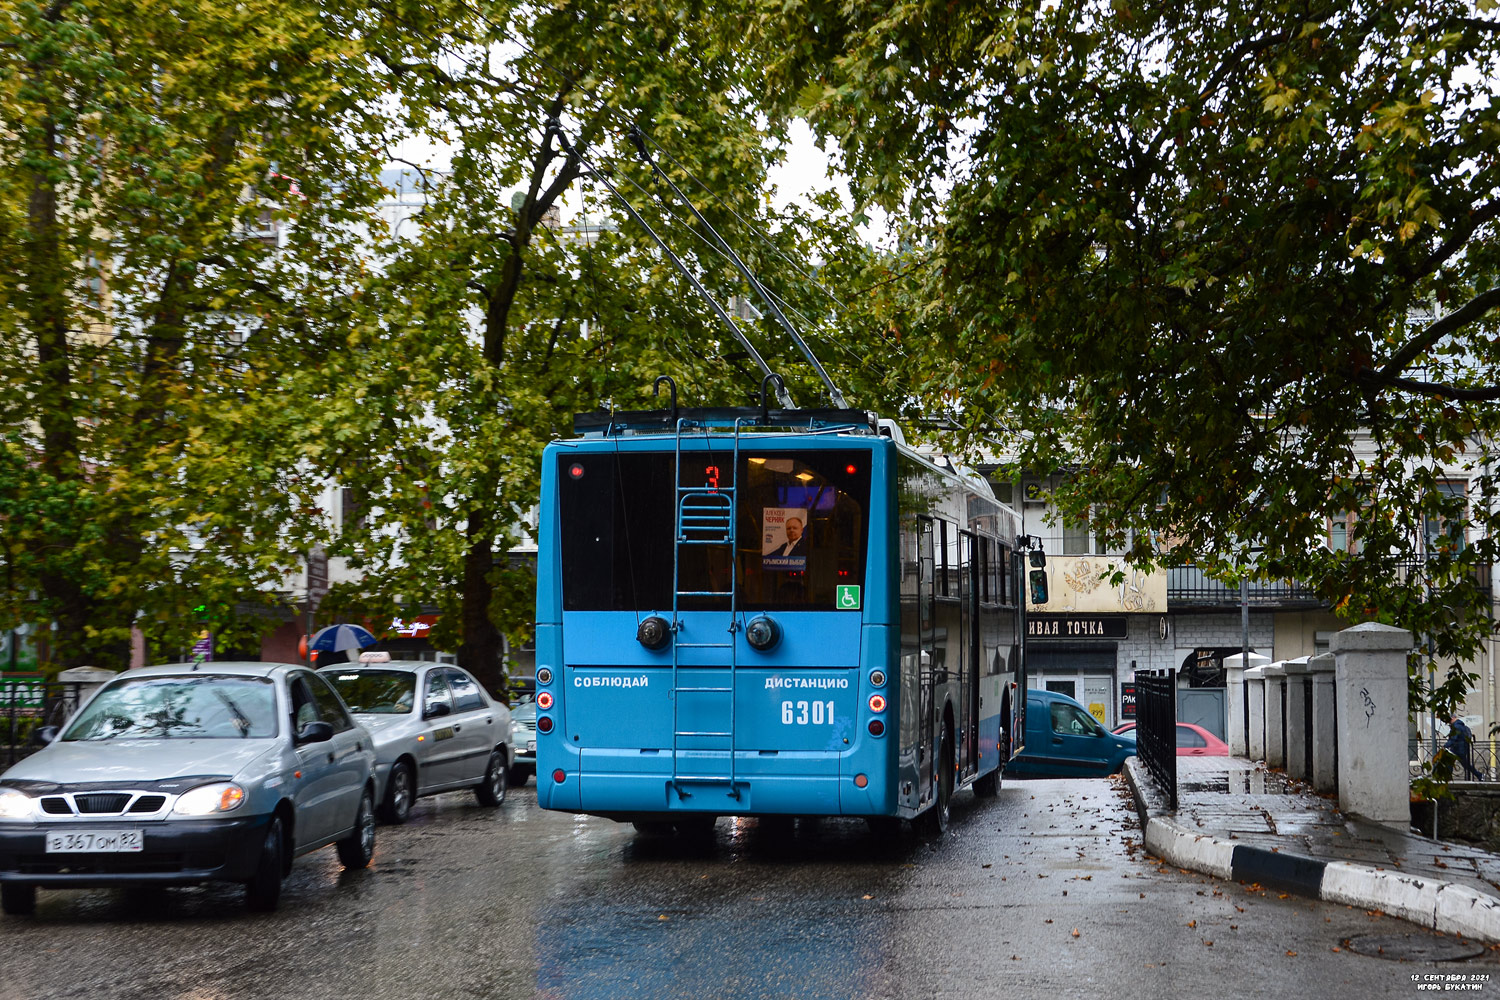 Крымский троллейбус, Богдан Т60111 № 6301